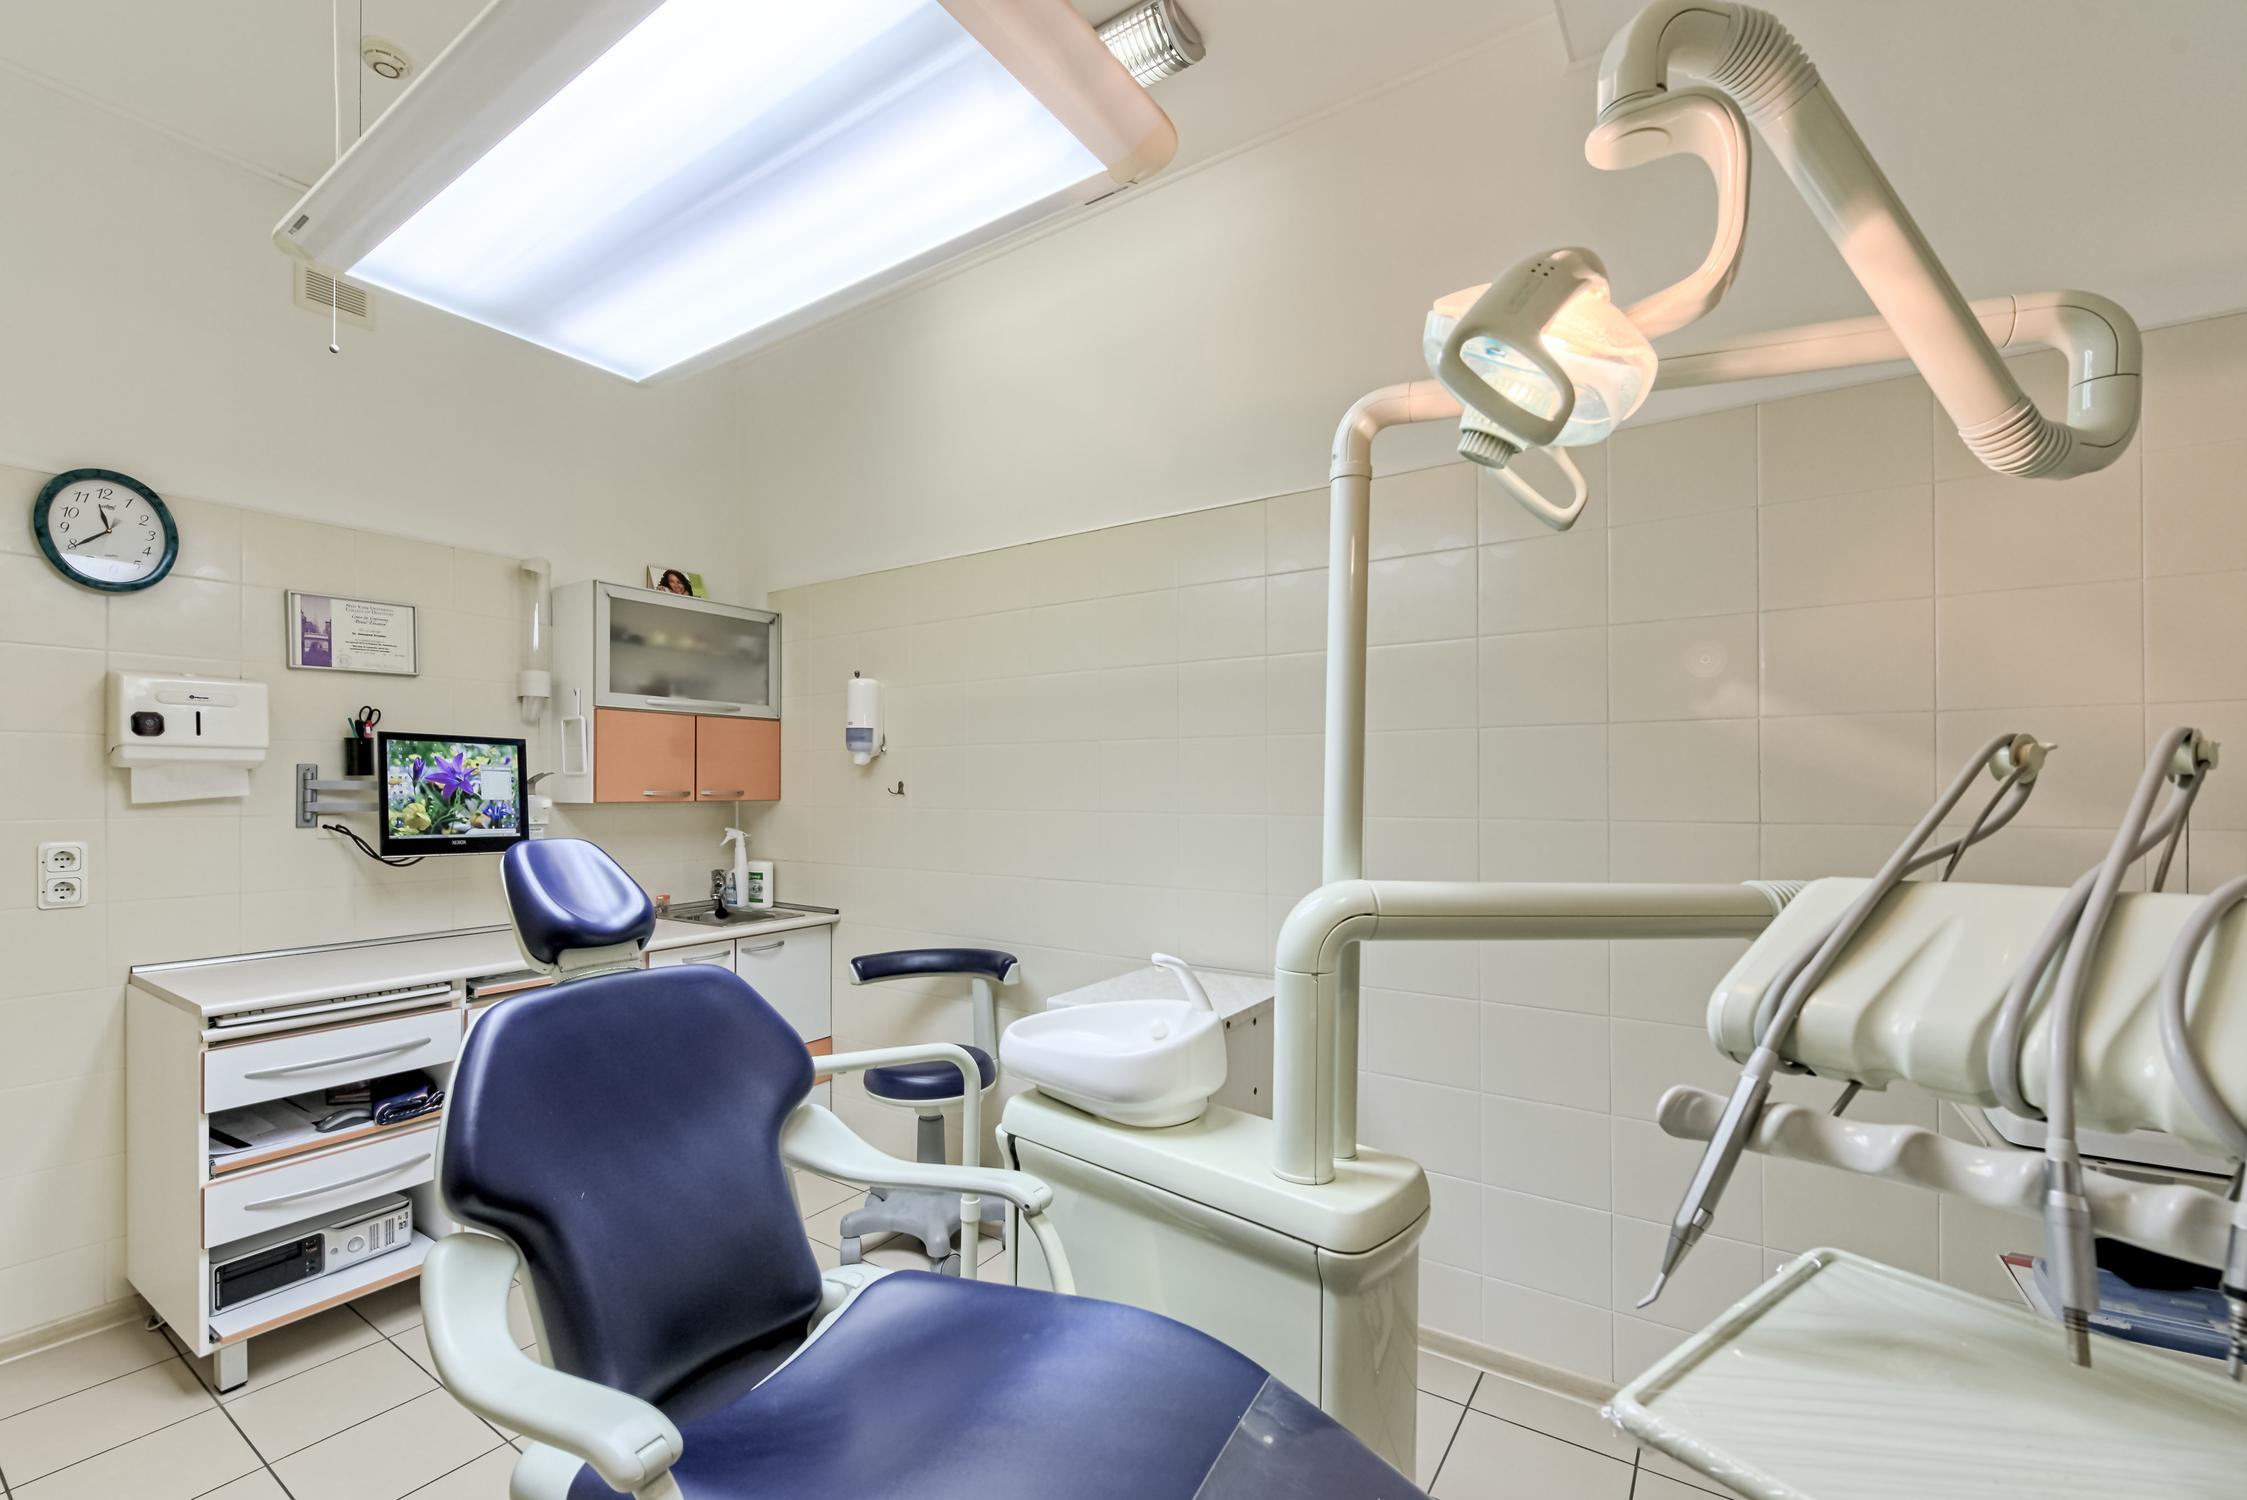 Стоматология пермь. Стоматология Вашъ Дантистъ СПБ. Клиника дантист. Ваш дантист стоматология. Дантист стоматологическая клиника фото.